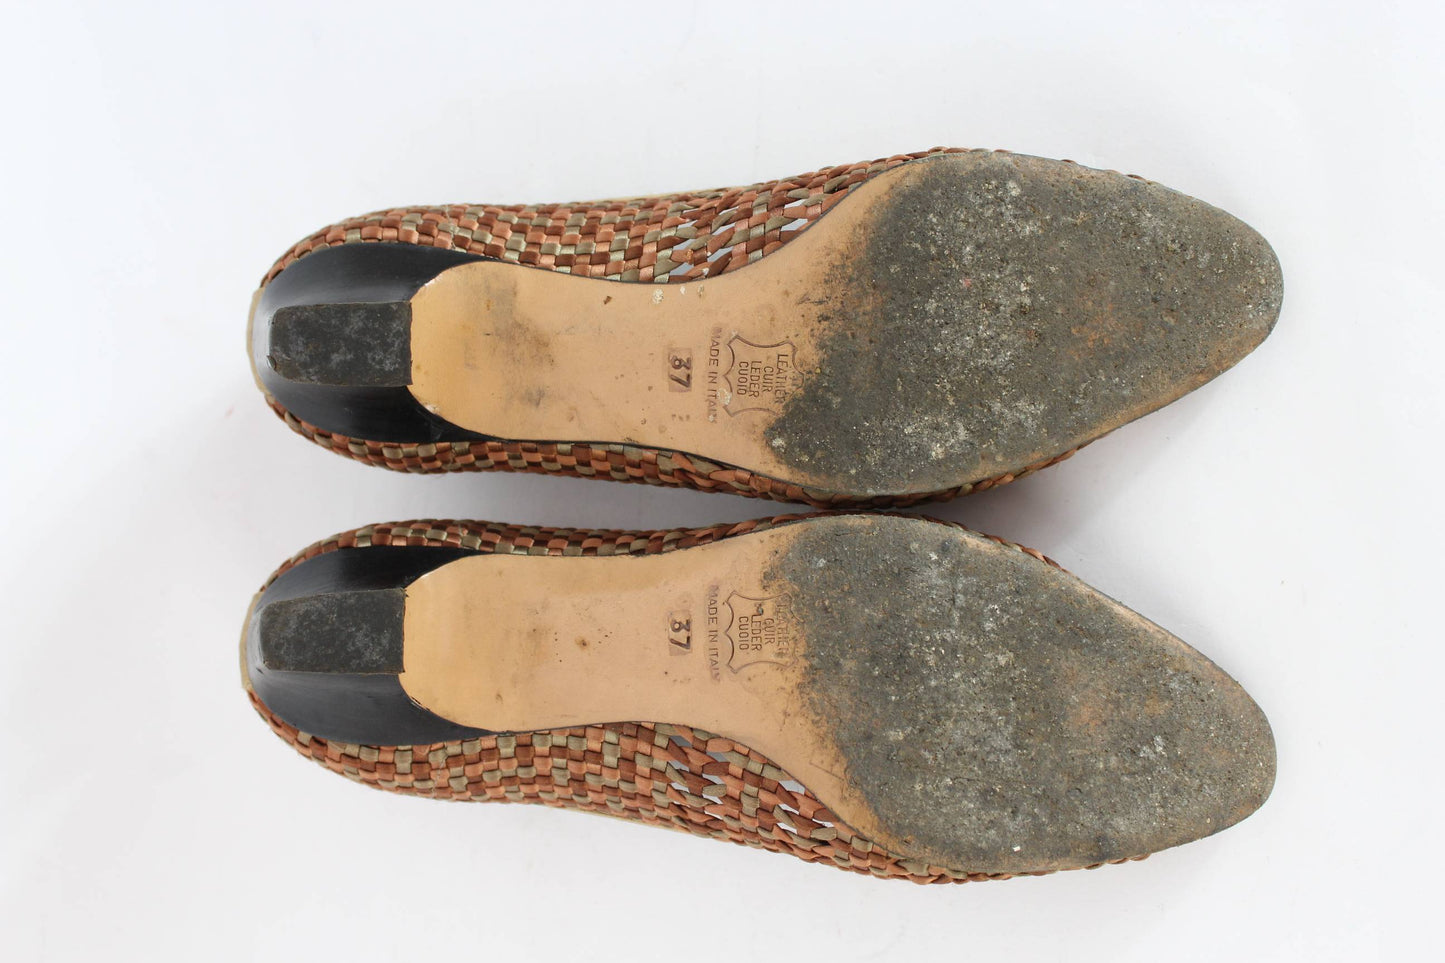 Yves Saint Laurent Brown Woven Leather Vintage Heel Shoes